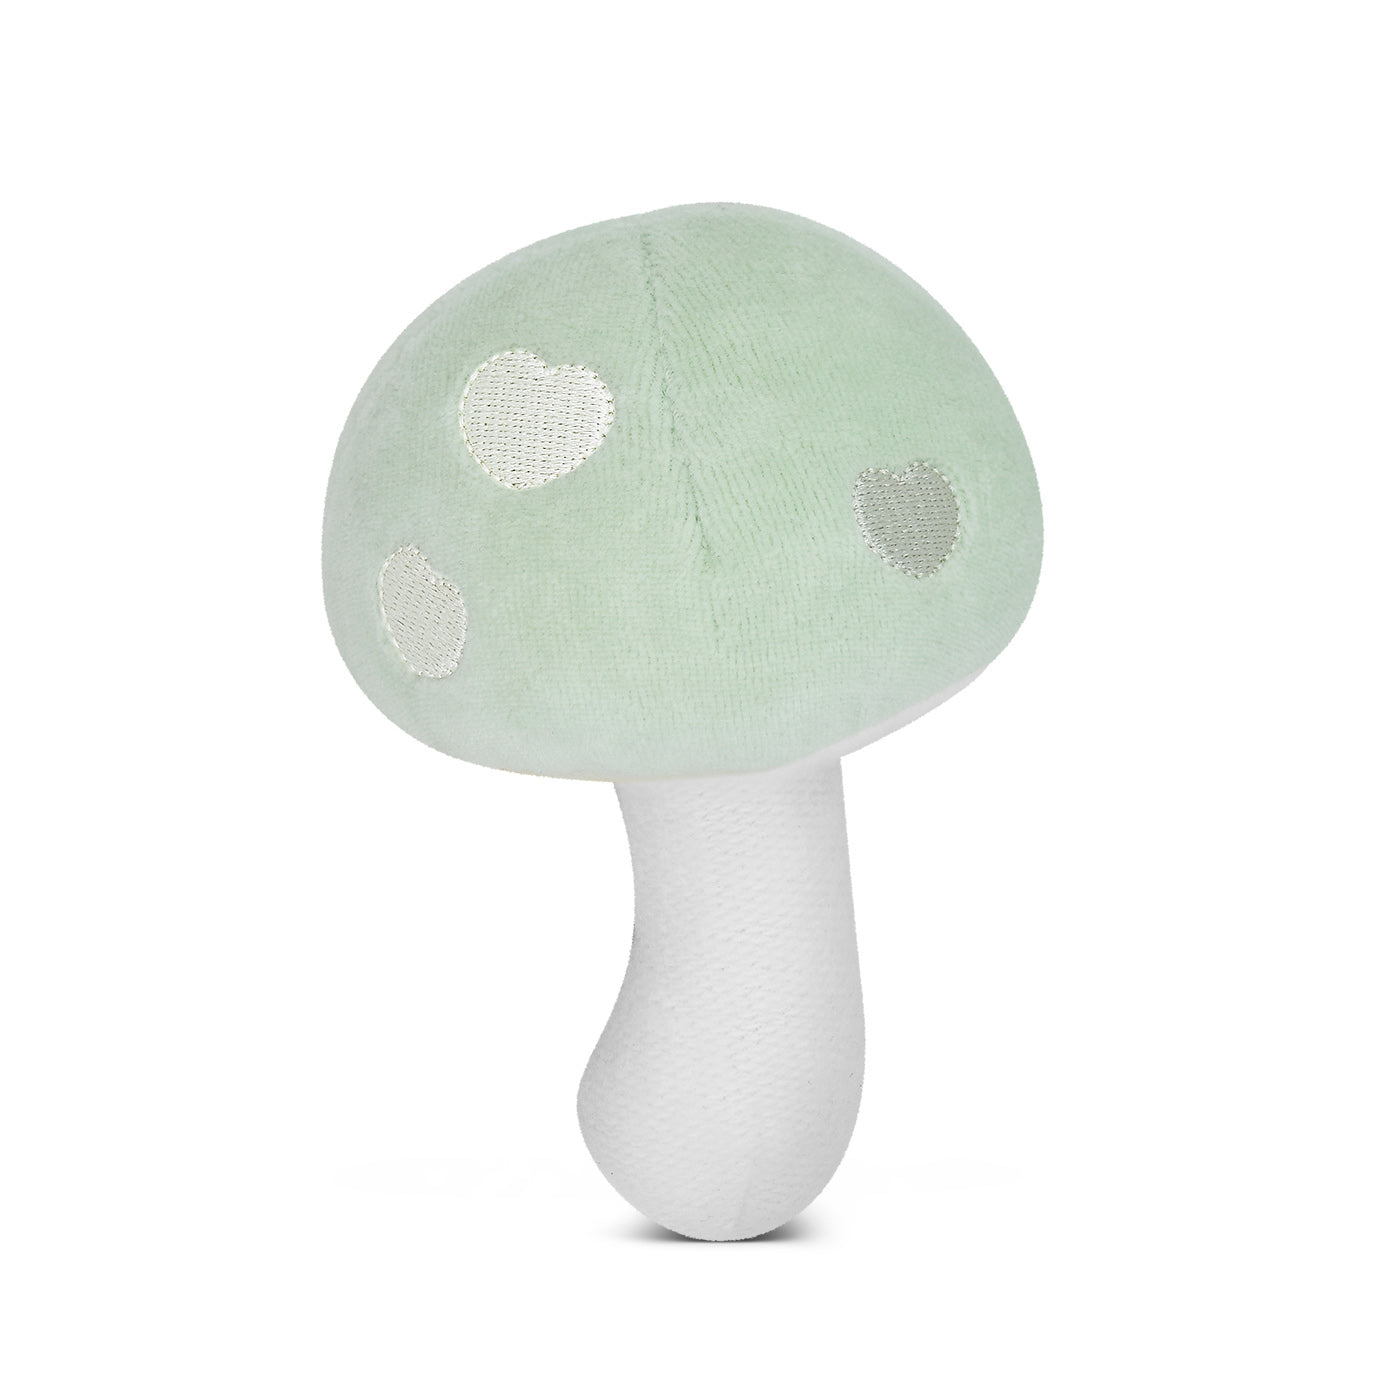 Mushroom Rattle - Mint Velour